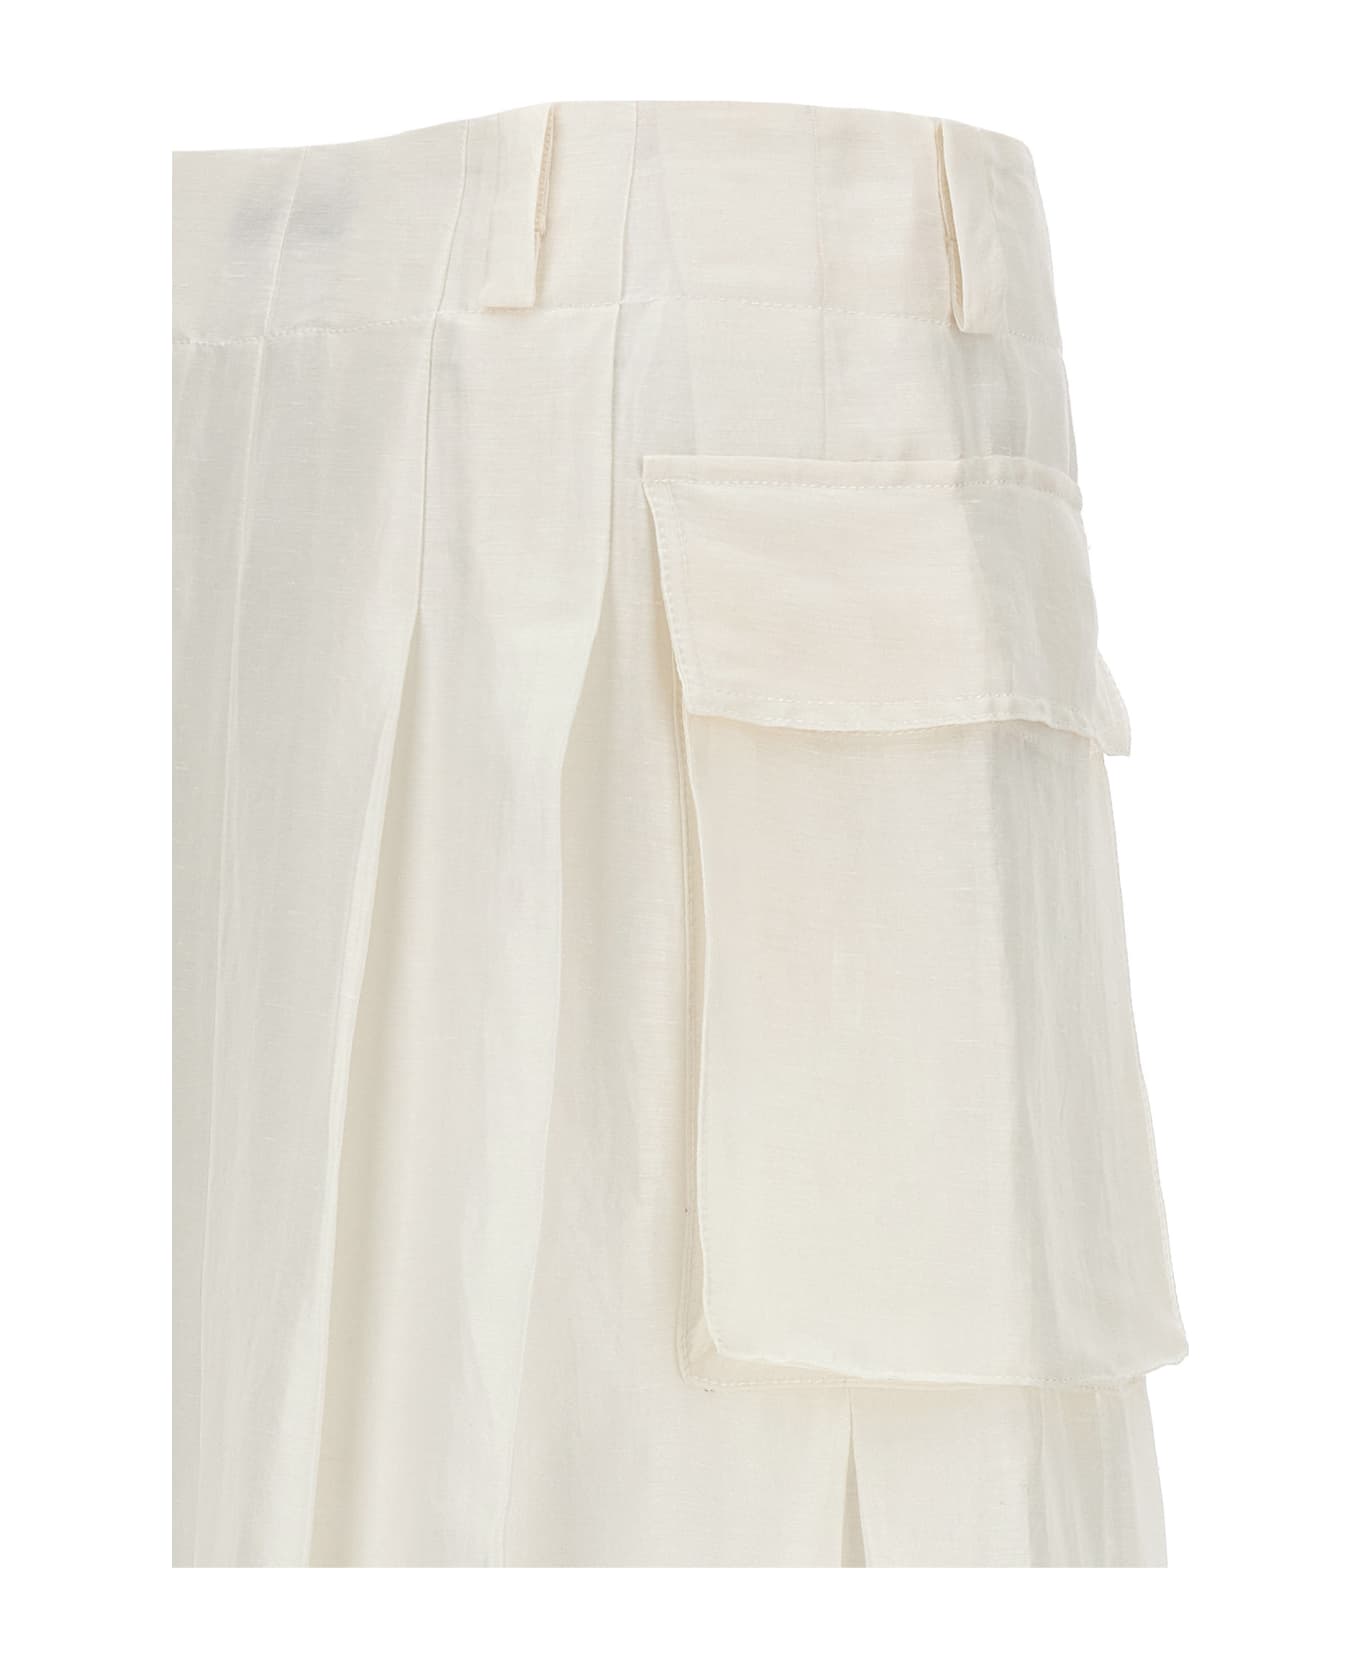 Alberta Ferretti Semi-sheer Maxi Skirt - White